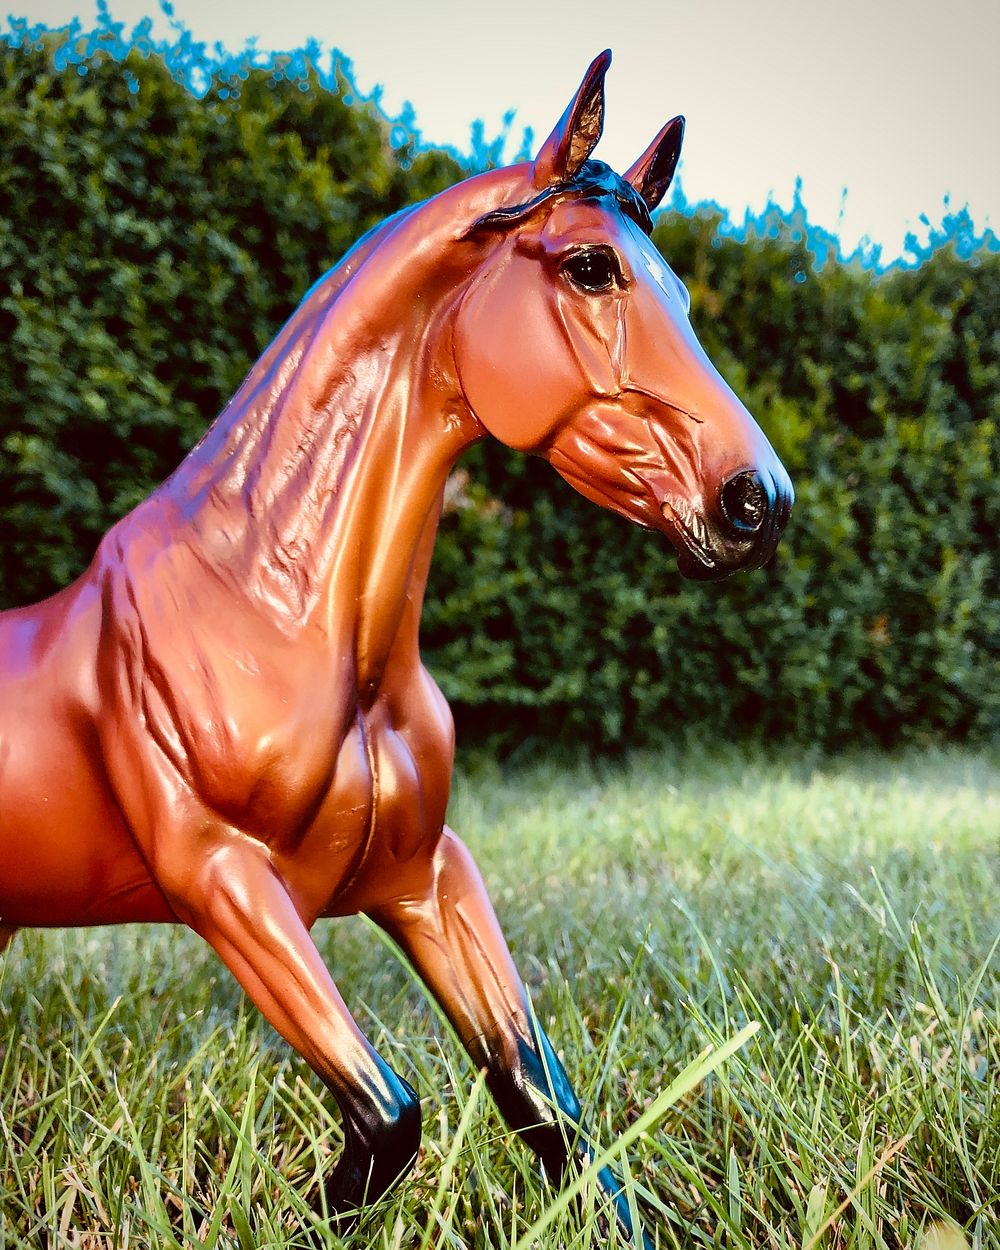 Horse model, farm animal sculpture.